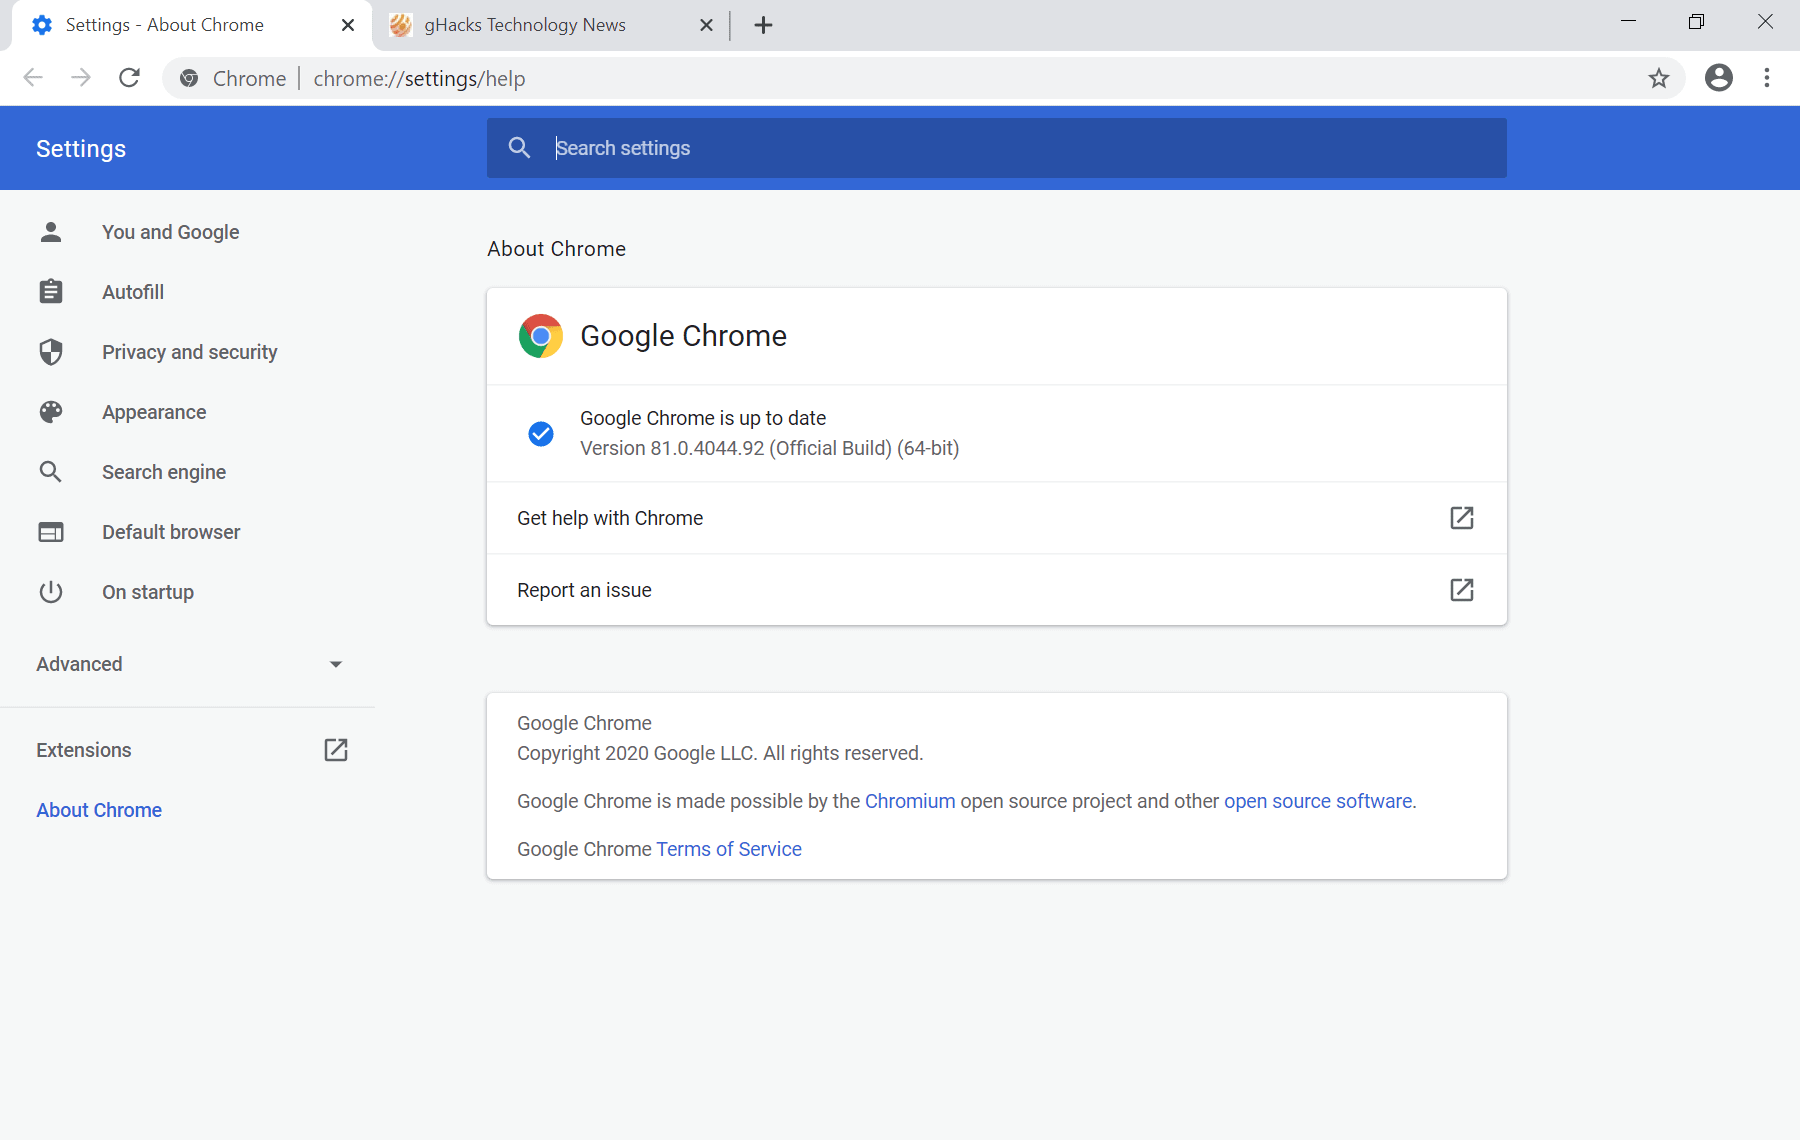 Google Chrome 81 released